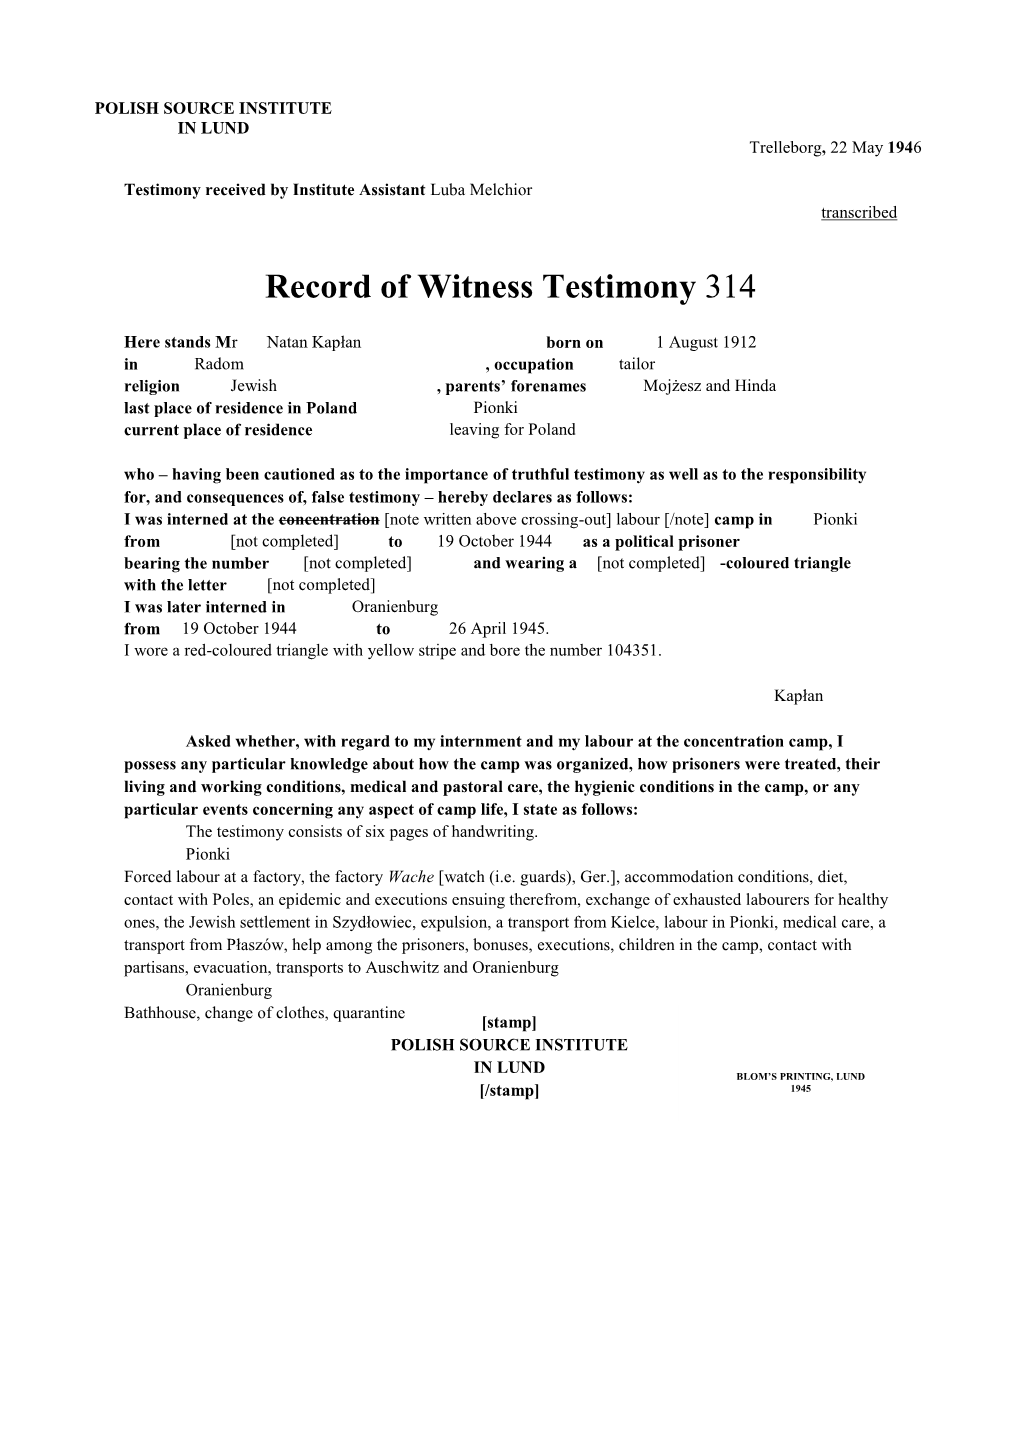 Record of Witness Testimony 314